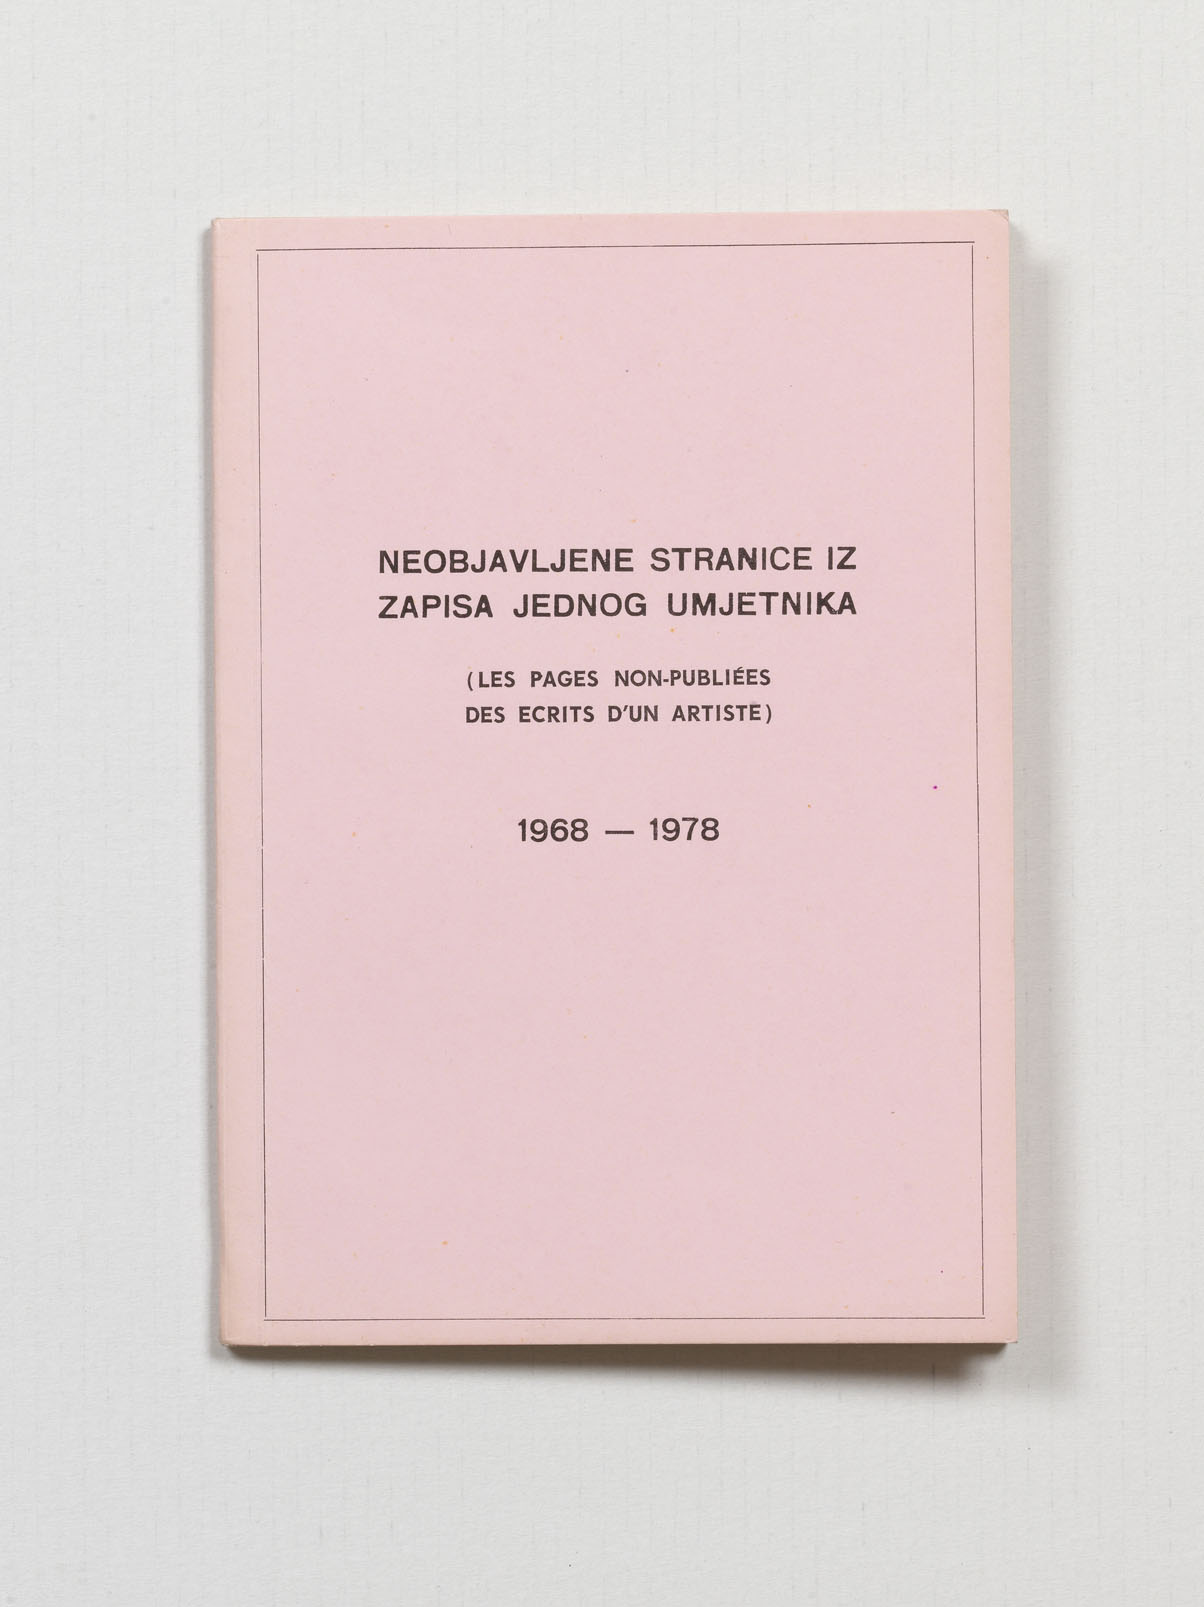 Goran Trbuljak - Neobjavlene stranice iz zapisa jednog umjetnika (Les pages non-publiées des ecrits d'un artiste) 1968-1978